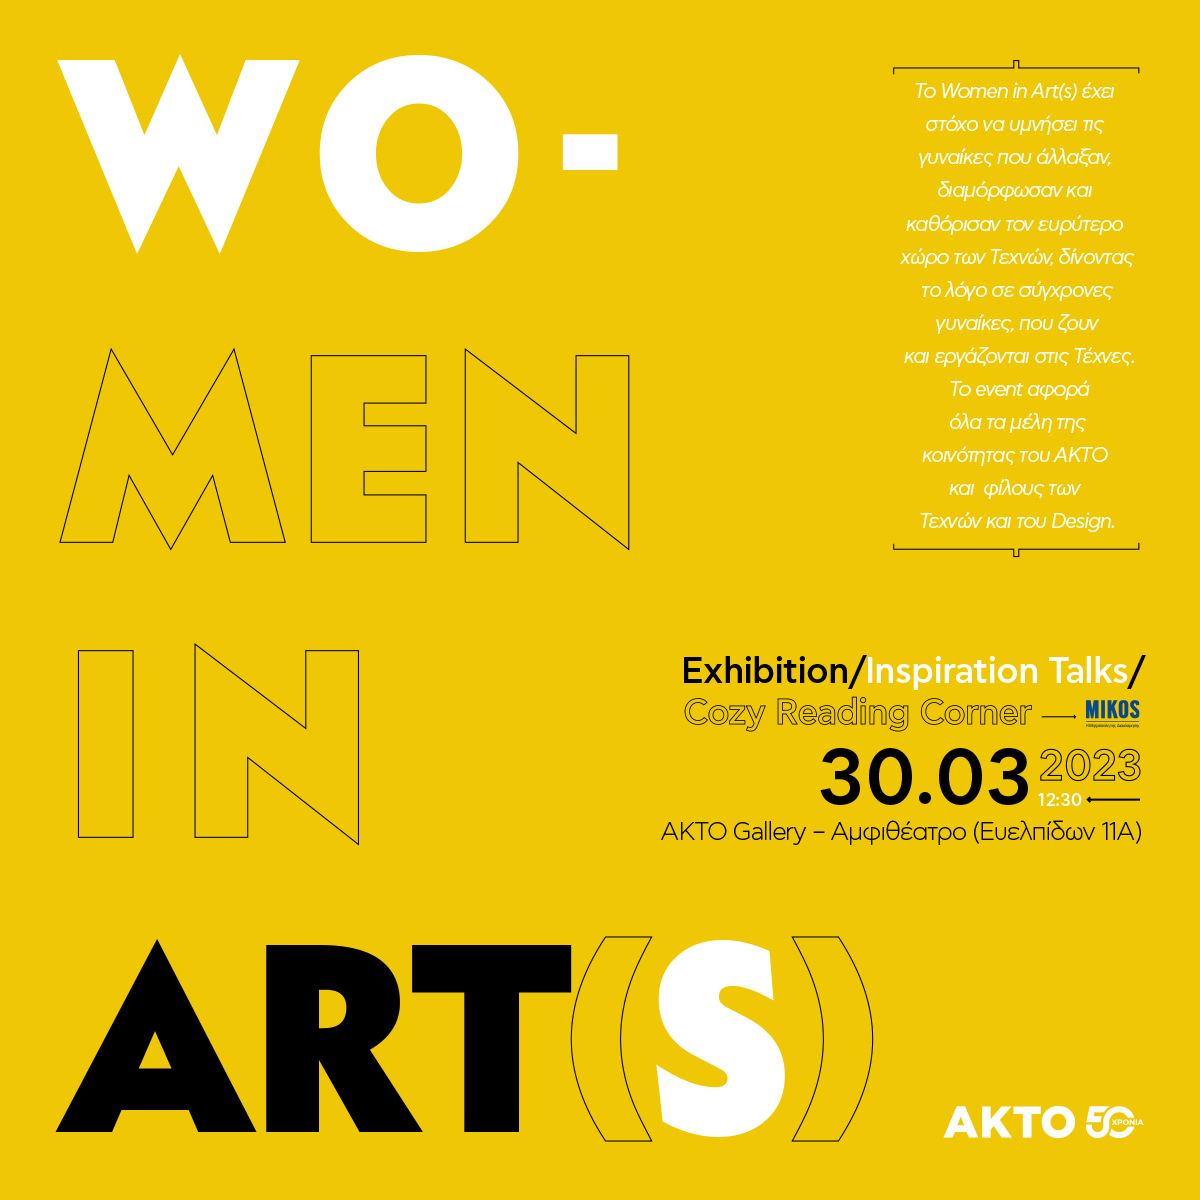 Archisearch Η ΑΚΤΟ διοργανώνει την εκδήλωση Women in Art(s) στις 30.03